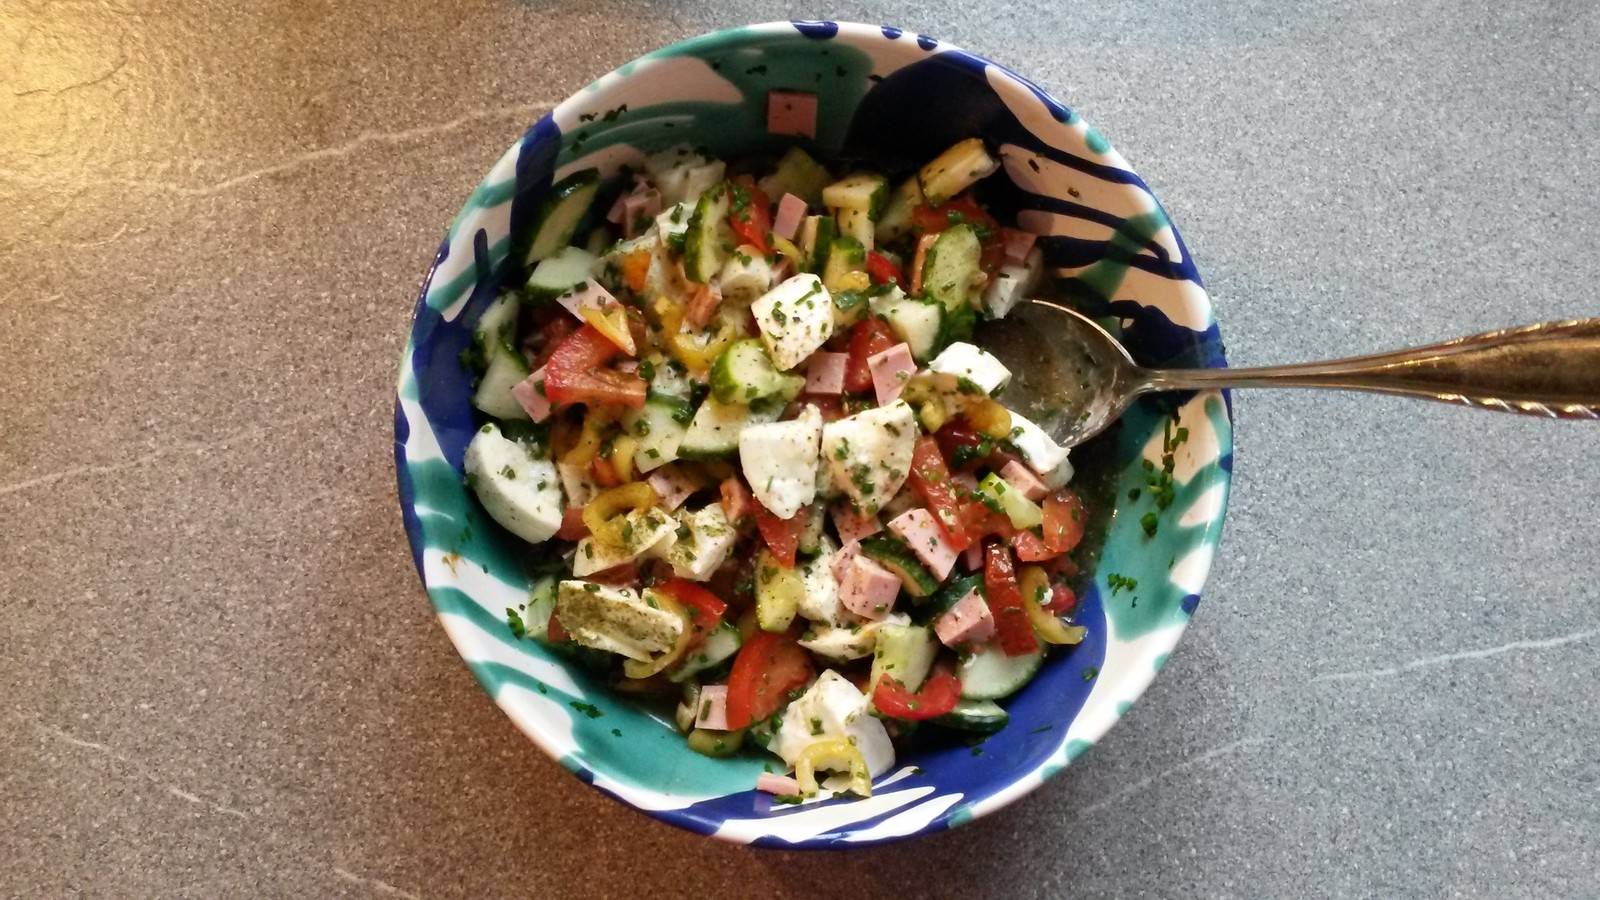 Bunter Salat mit Mozzarella